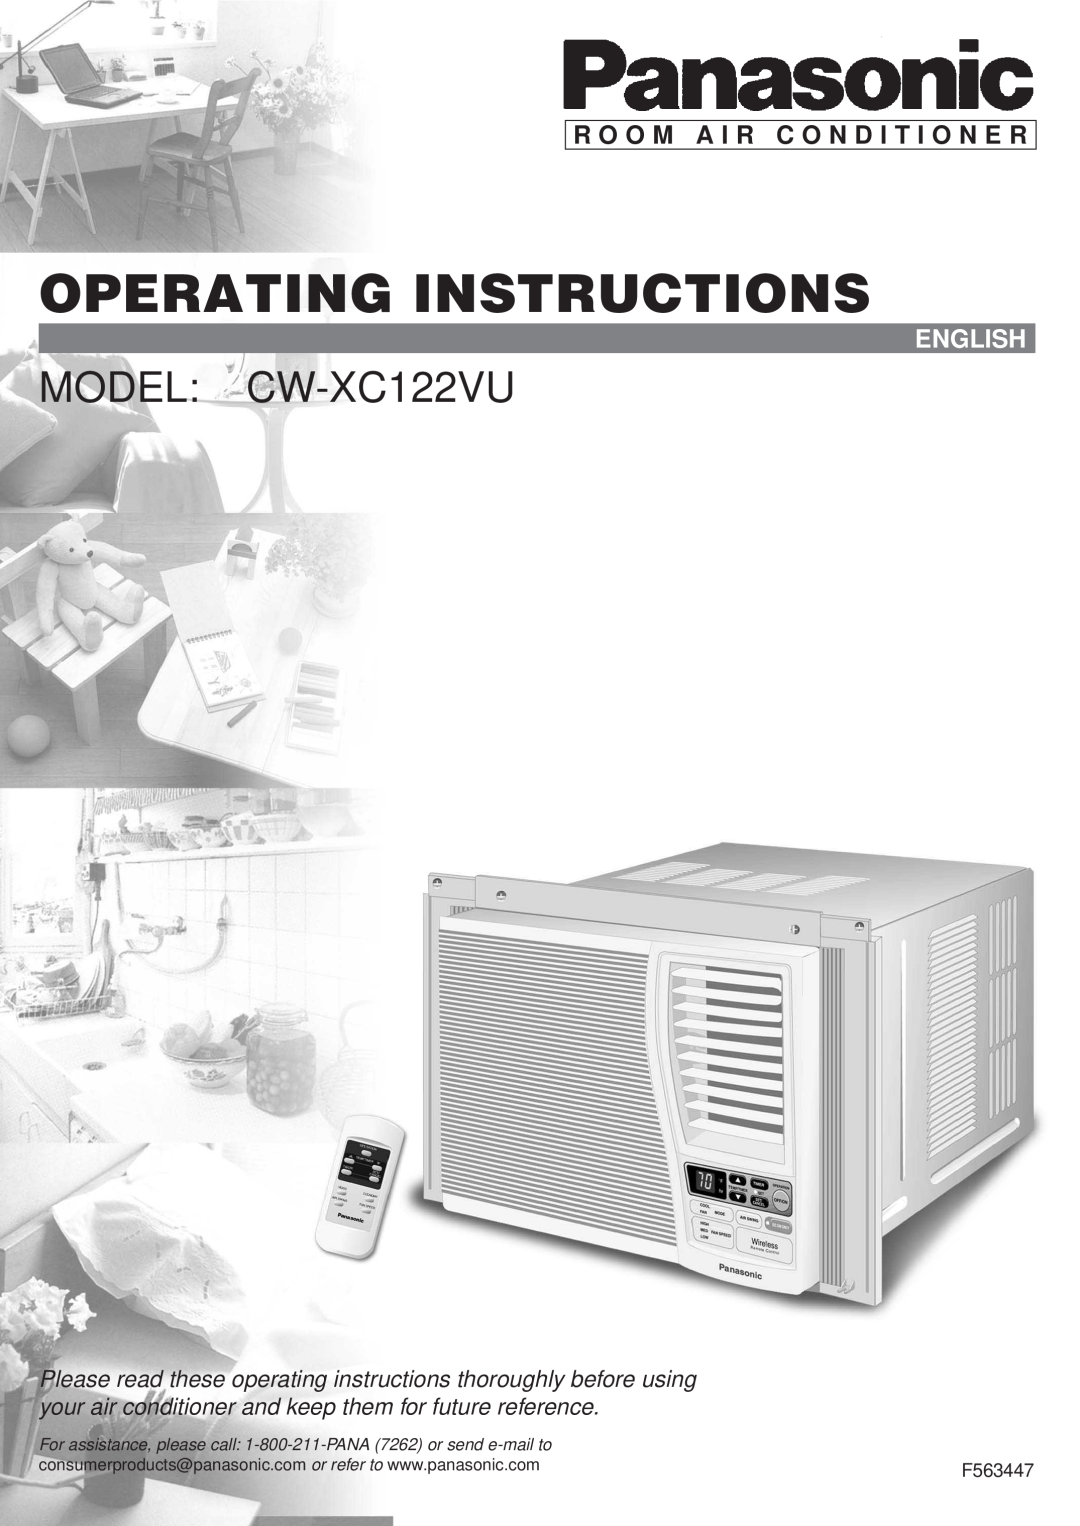 Panasonic manual Operating Instructions, MODEL CW-XC122VU, R O O M A I R C O N D I T I O N E R, English 